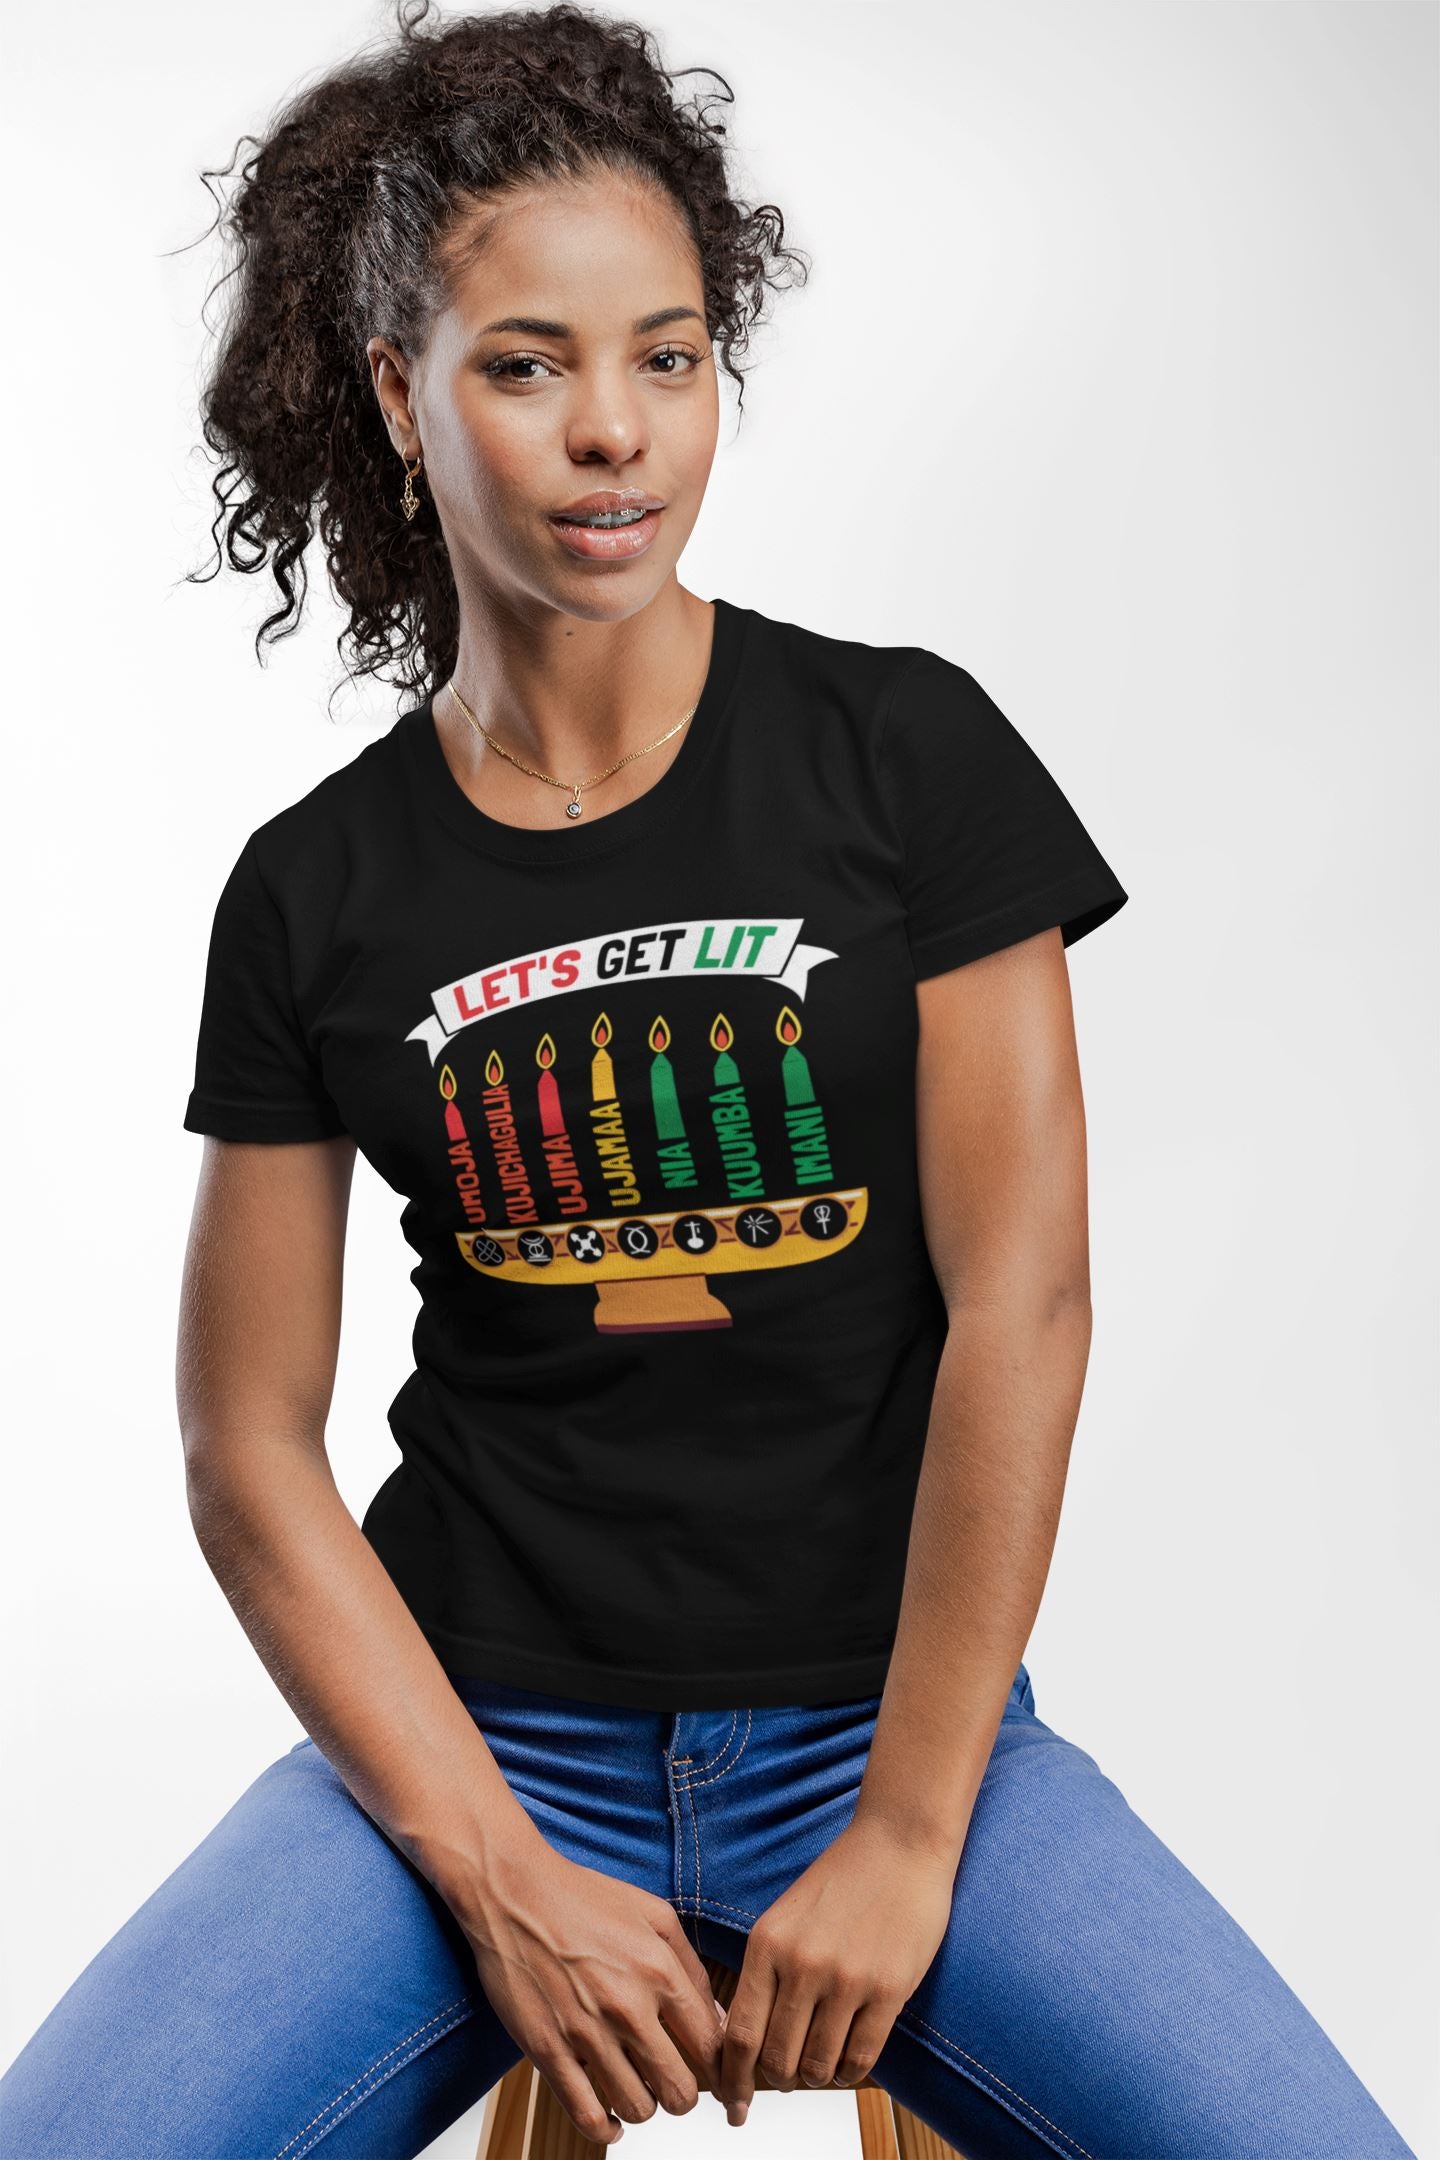 Candles Seven Principles Of Kwanzaa T-Shirt Apparel Gearment 